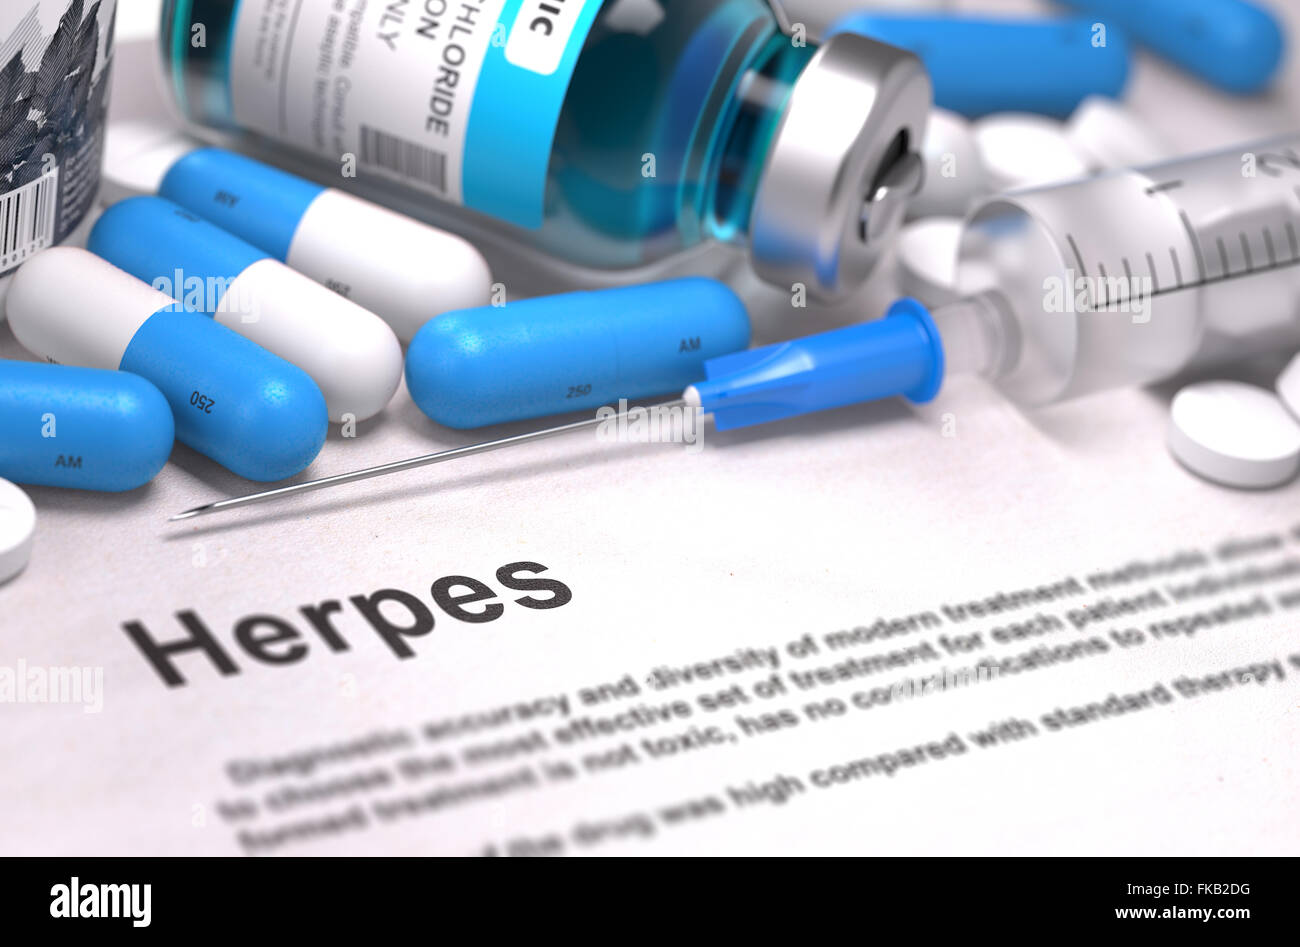 Diagnosis - Herpes. Medical Concept. Stock Photo